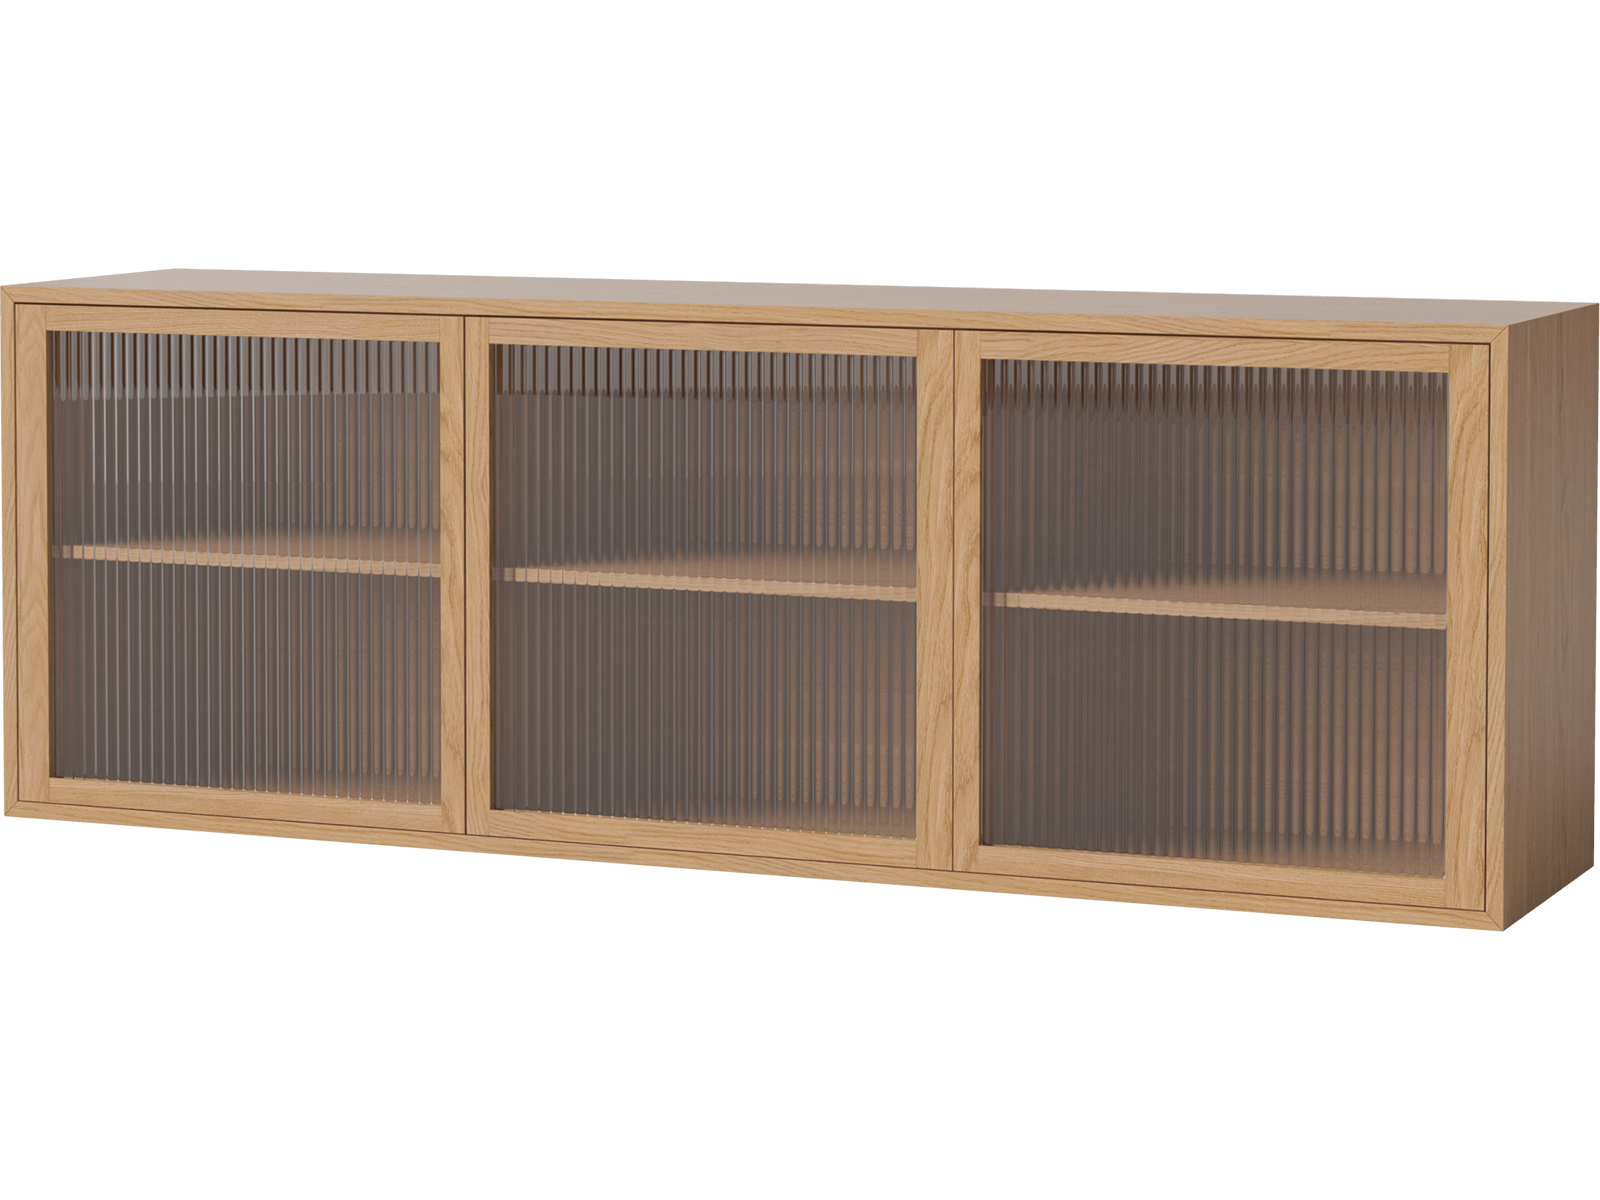 bolia-case-sideboard-with-shelves-3-glass-doors-oiled-oak-case-komod-polcokkal-3-uvegajto-tolgy